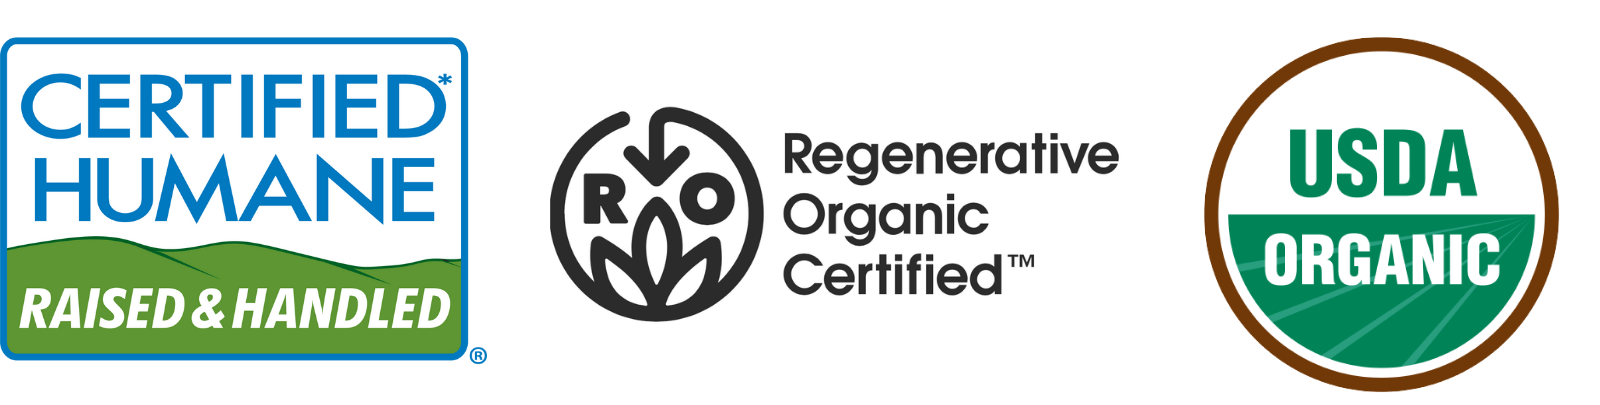 Labels: Certified Human, Regenerative Organic Certified, USDA Organic